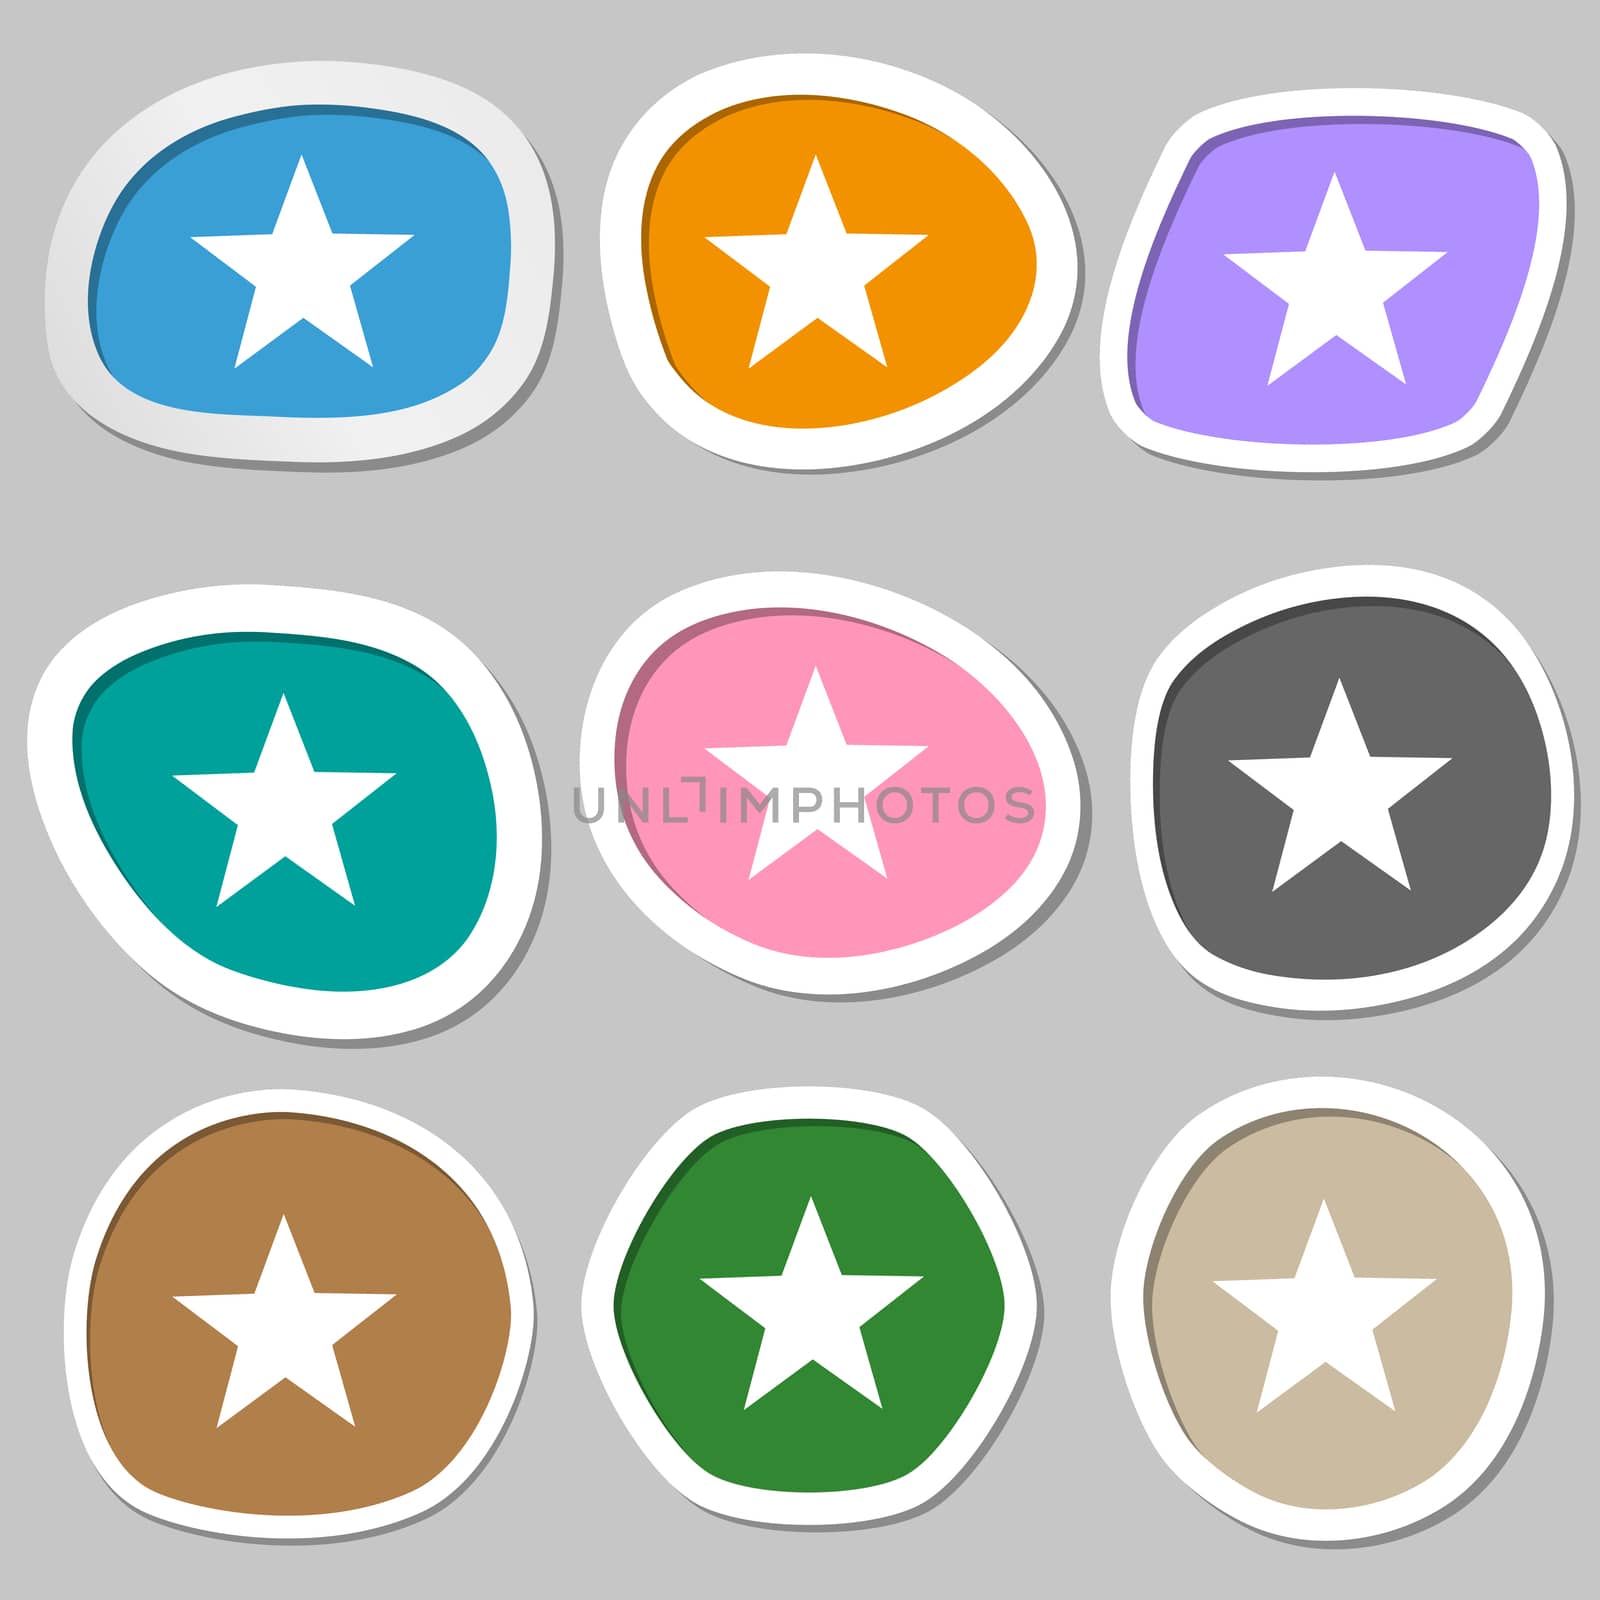 Star sign icon. Favorite button. Navigation symbol. Multicolored paper stickers. illustration